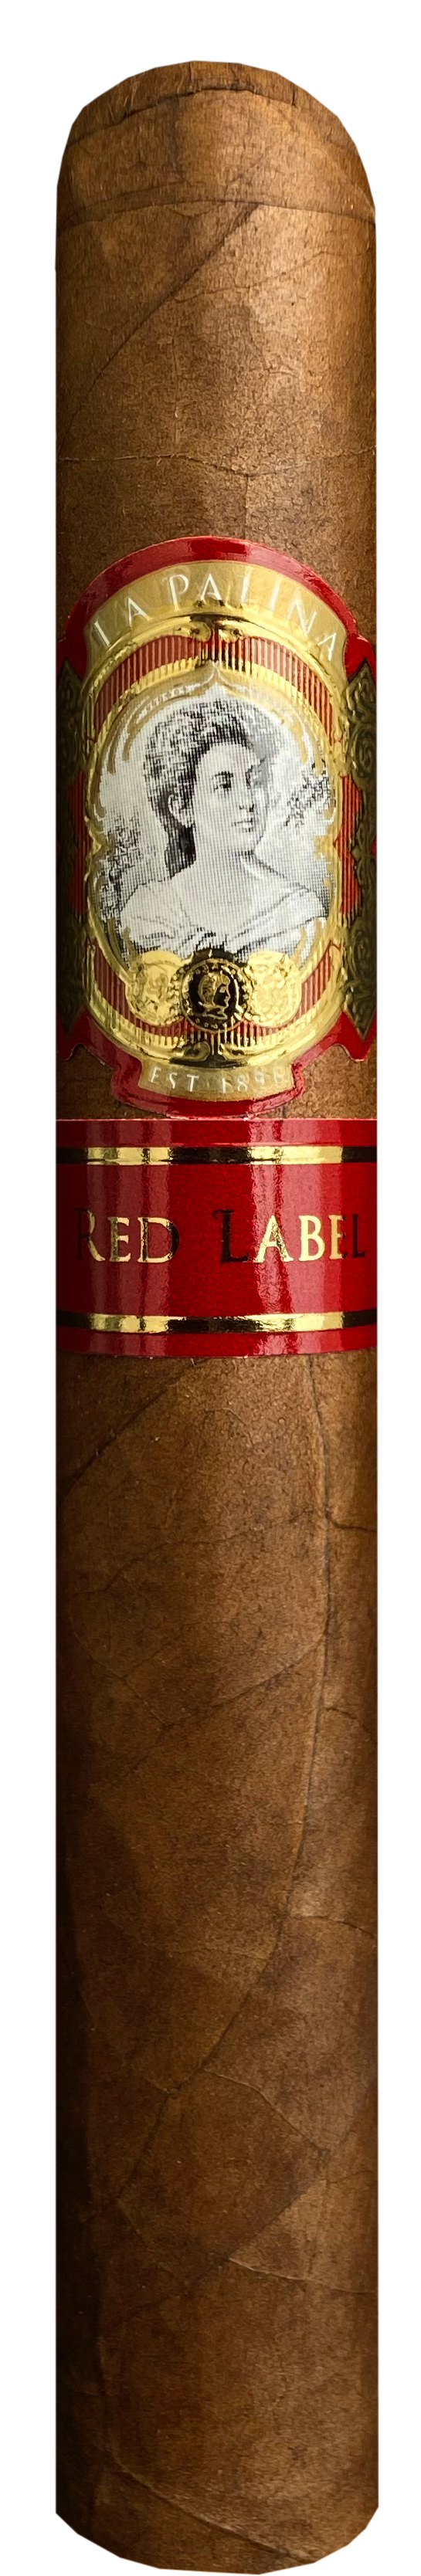 La Palina Red Label Robusto